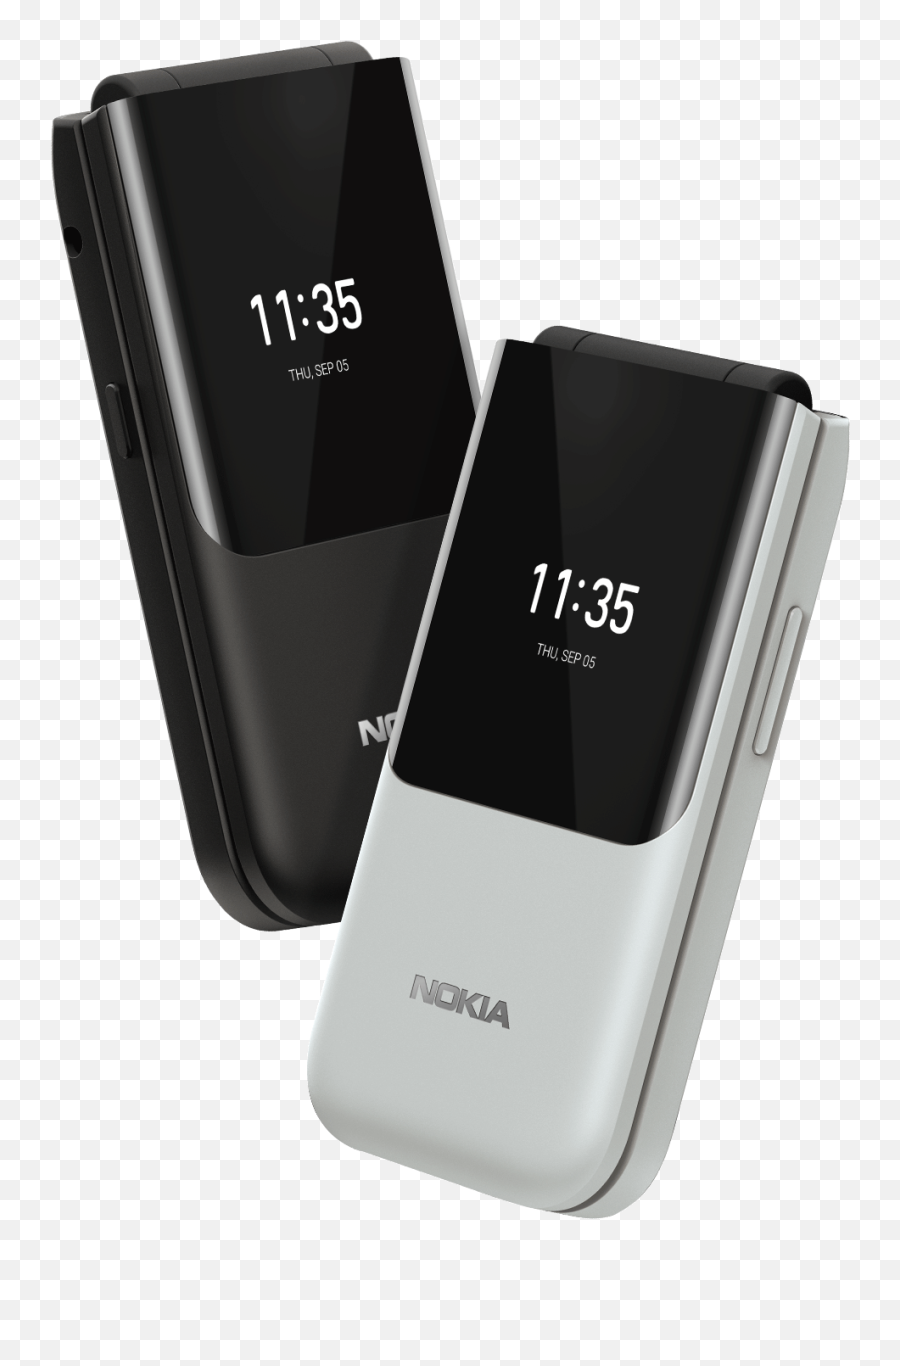 Nokia 2720 Flip - Nokia 2720 Flip Png,Flip Phone Png